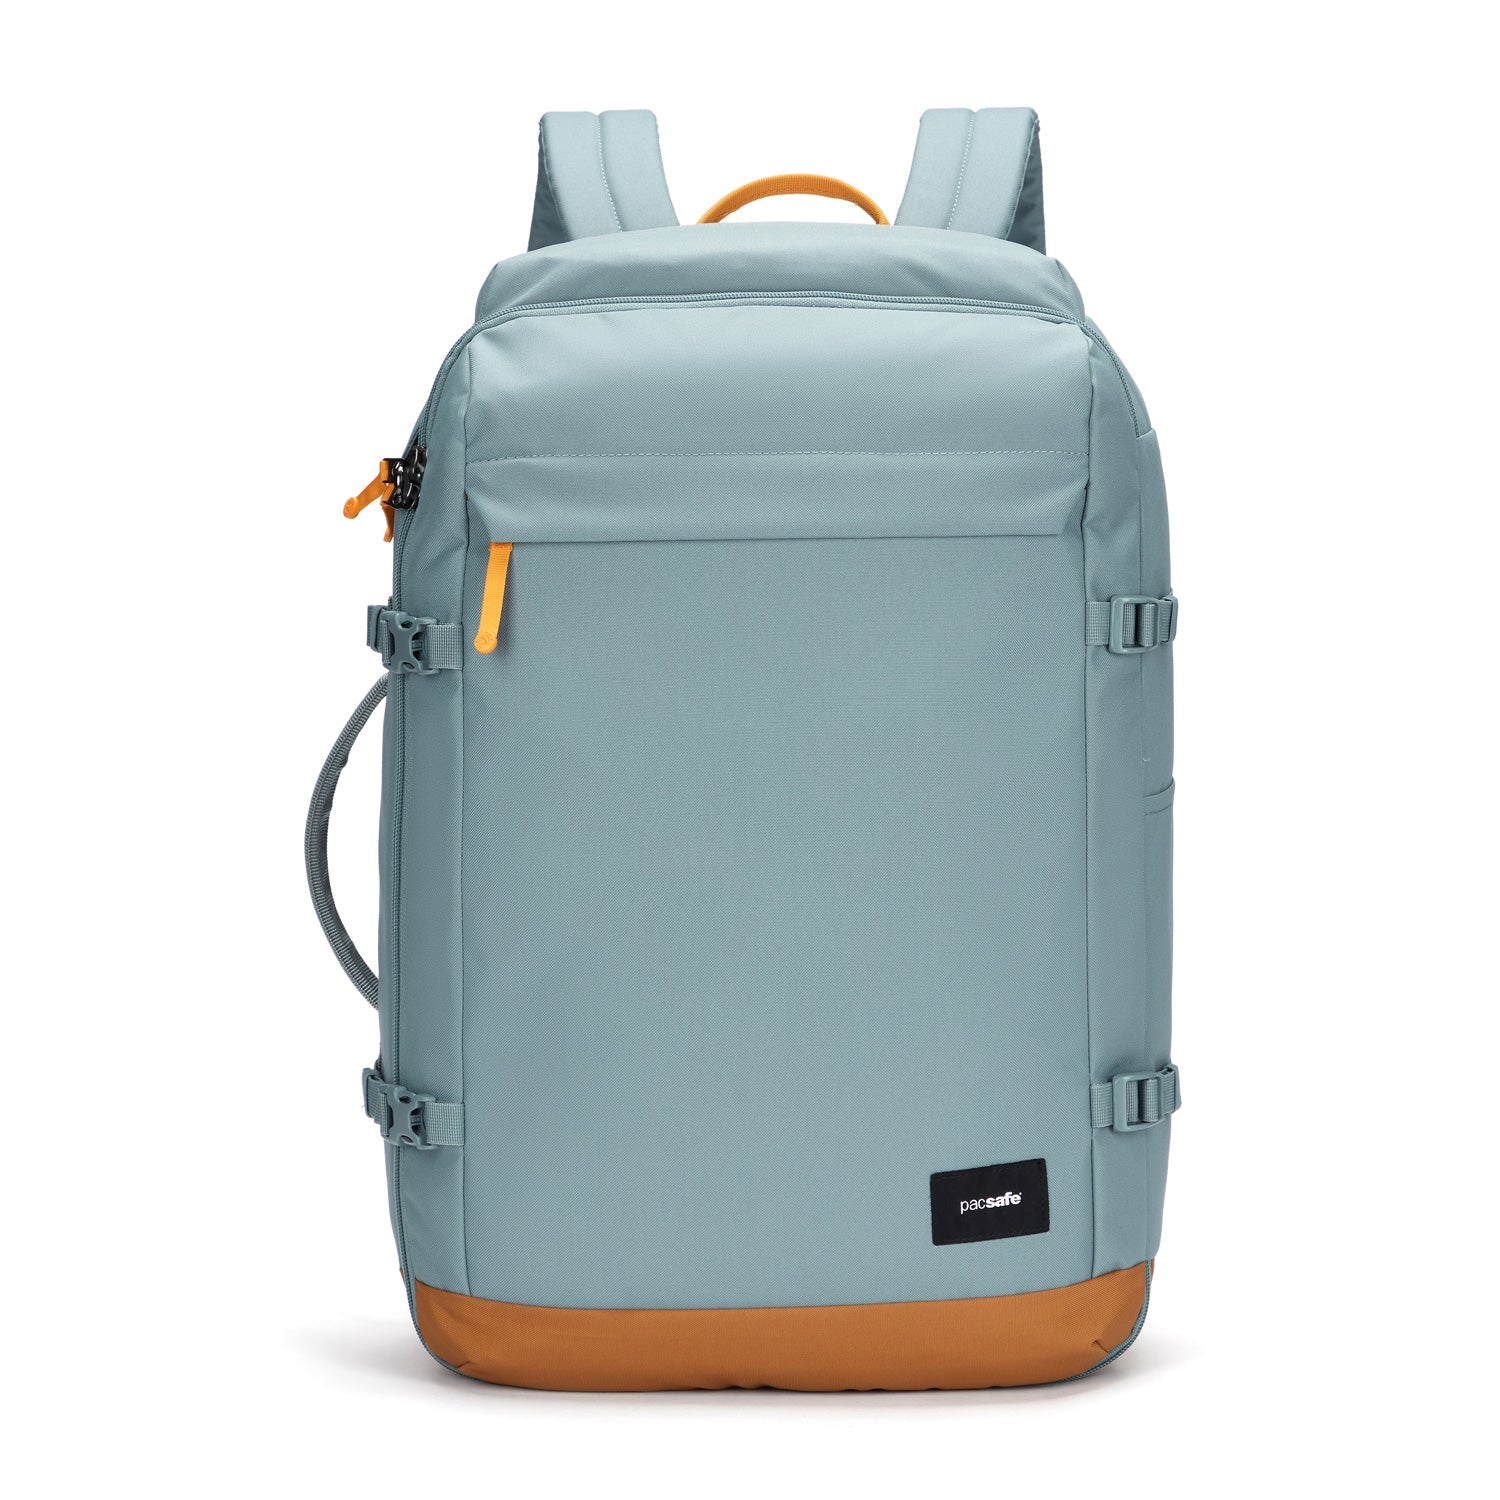 Carry-On Backpacks